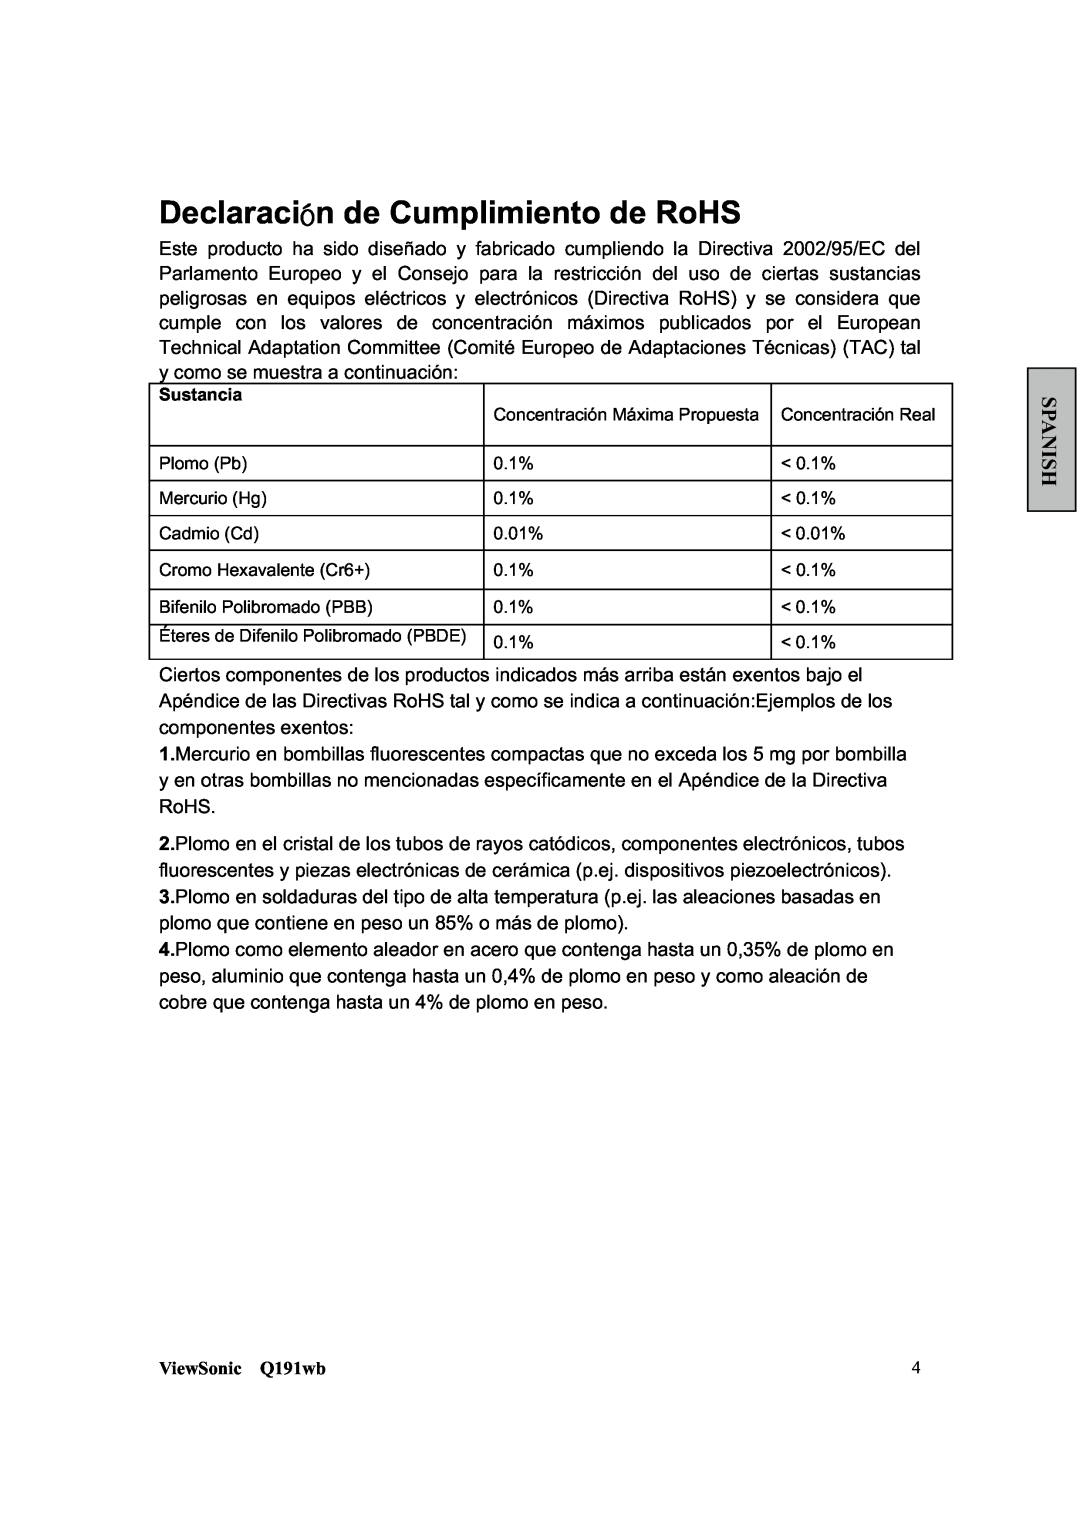 ViewSonic Q191WB manual DeclaraciΆn de Cumplimiento de RoHS, Spanish, ViewSonic Q191wb, Sustancia 